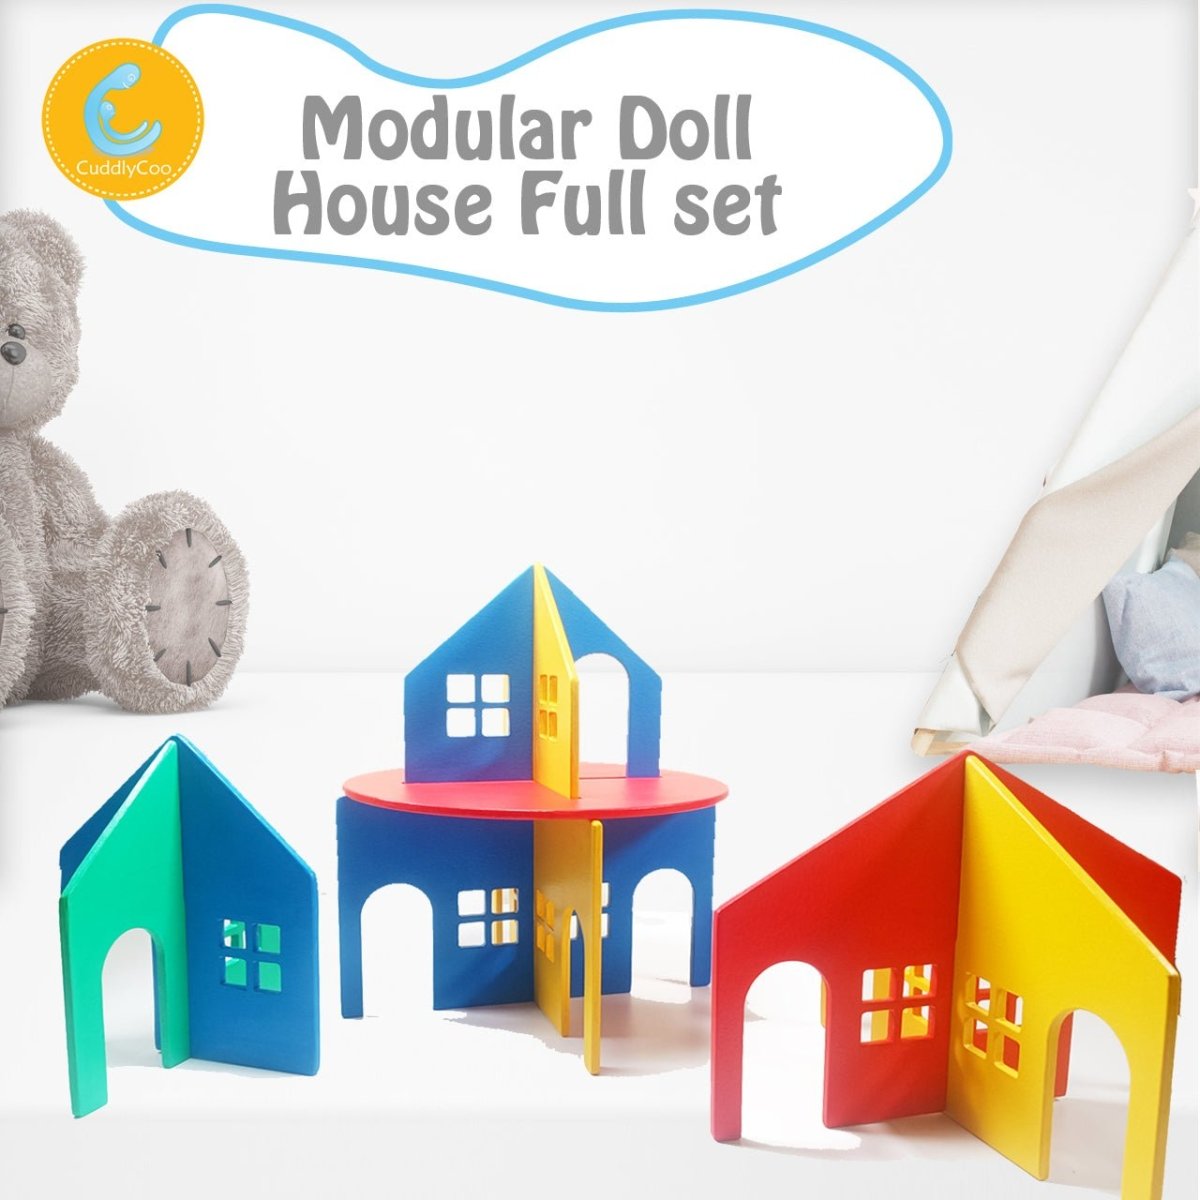 CuddlyCoo Modular Wooden Doll House Full Set - CCMODULARFULL